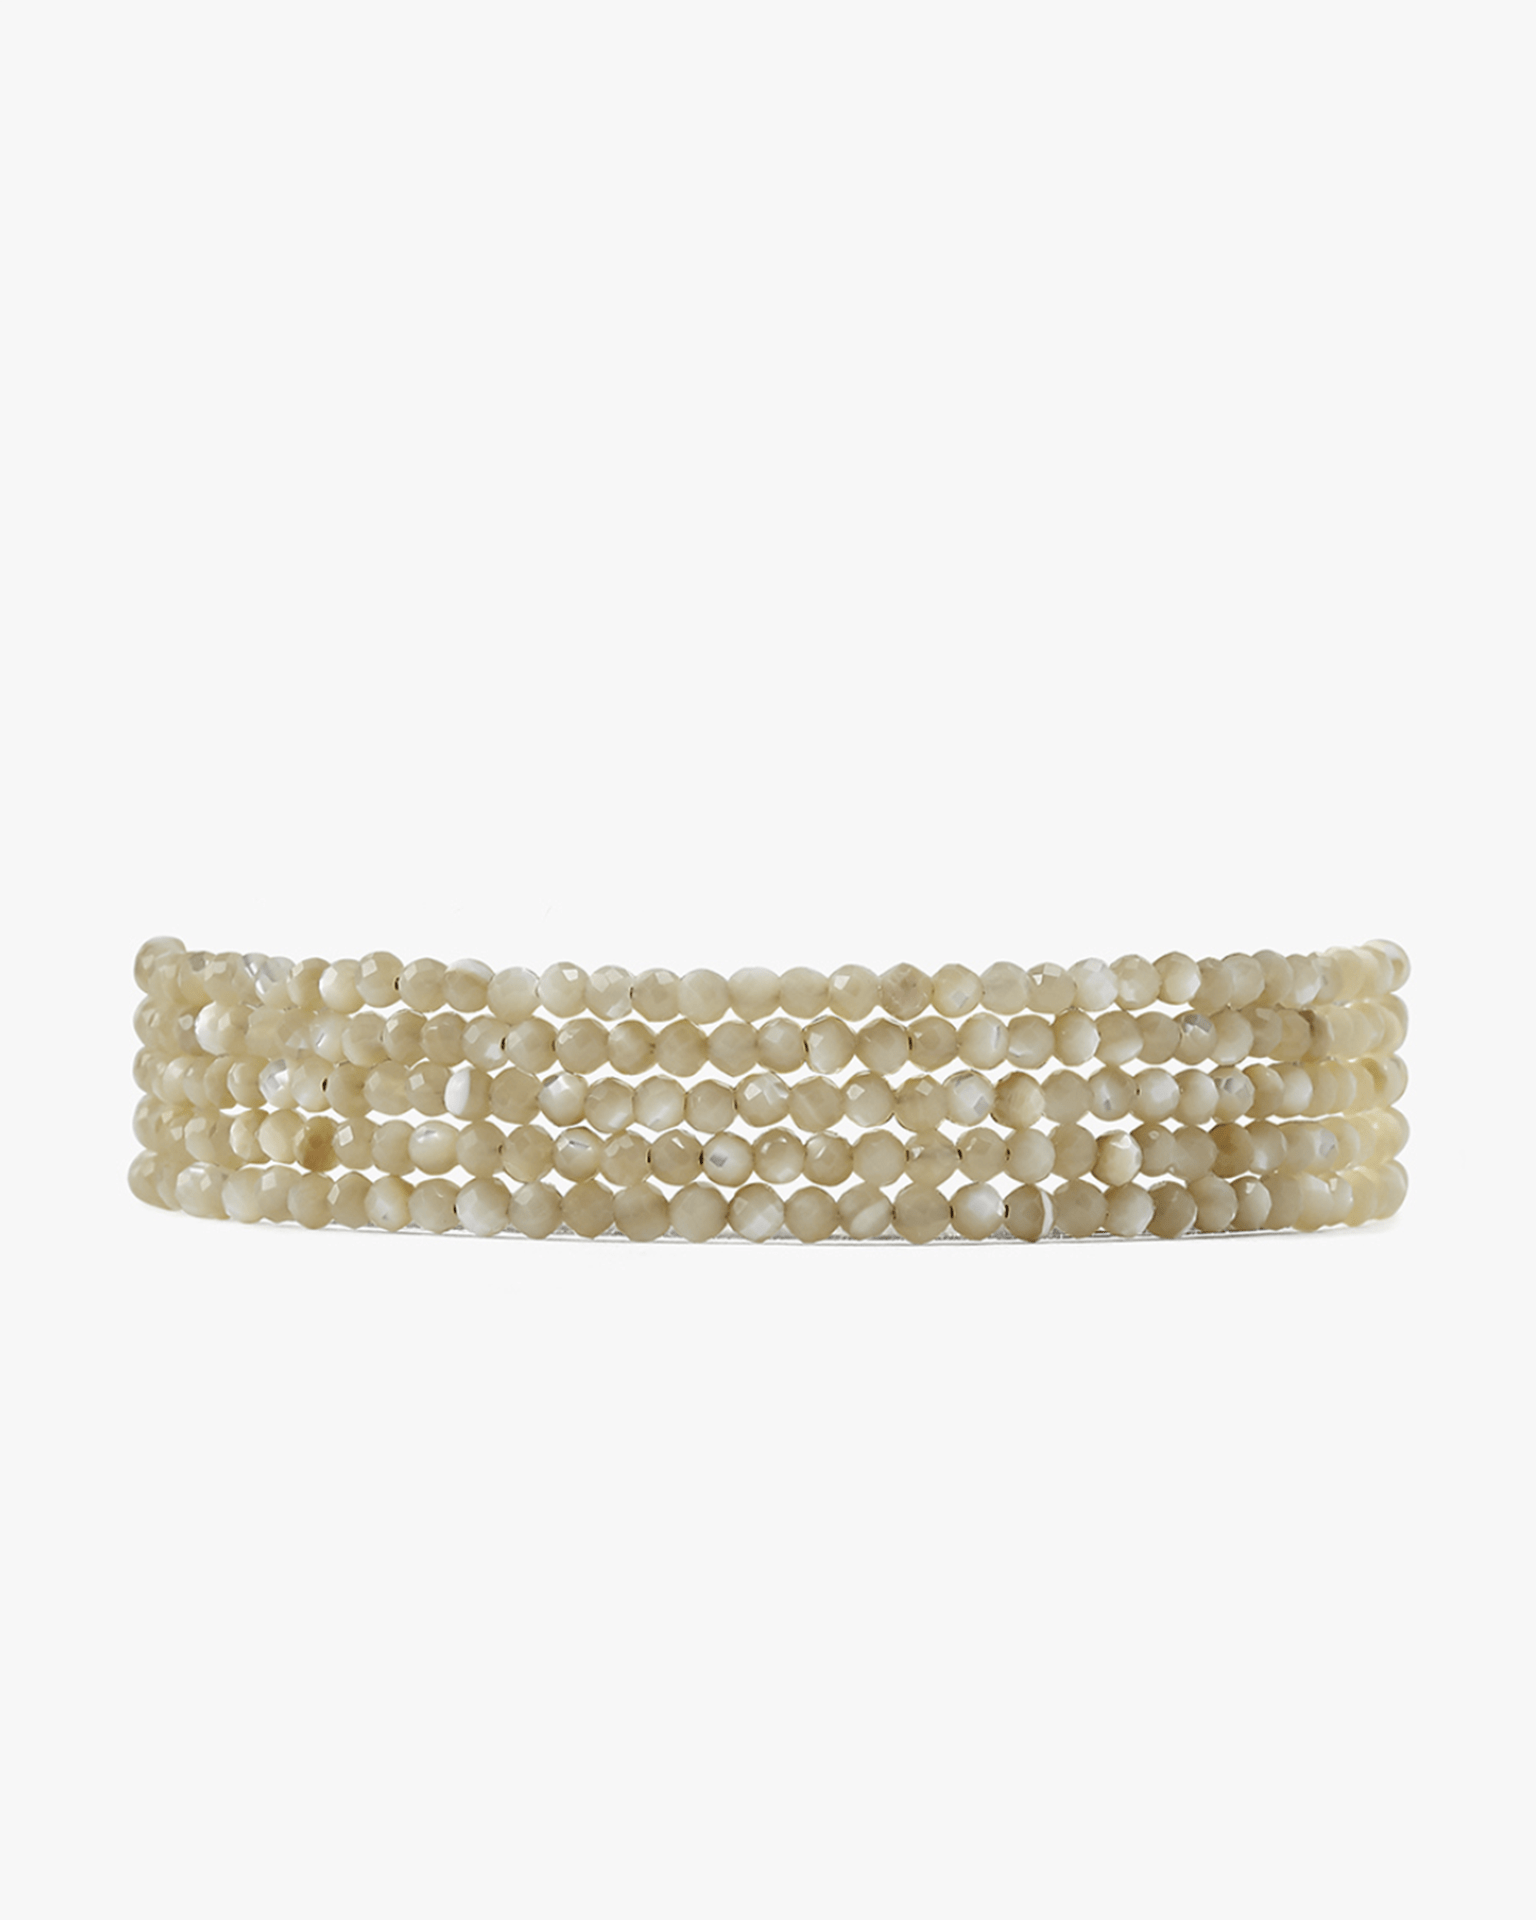 CL Natural/Gold Wrap Bracelet